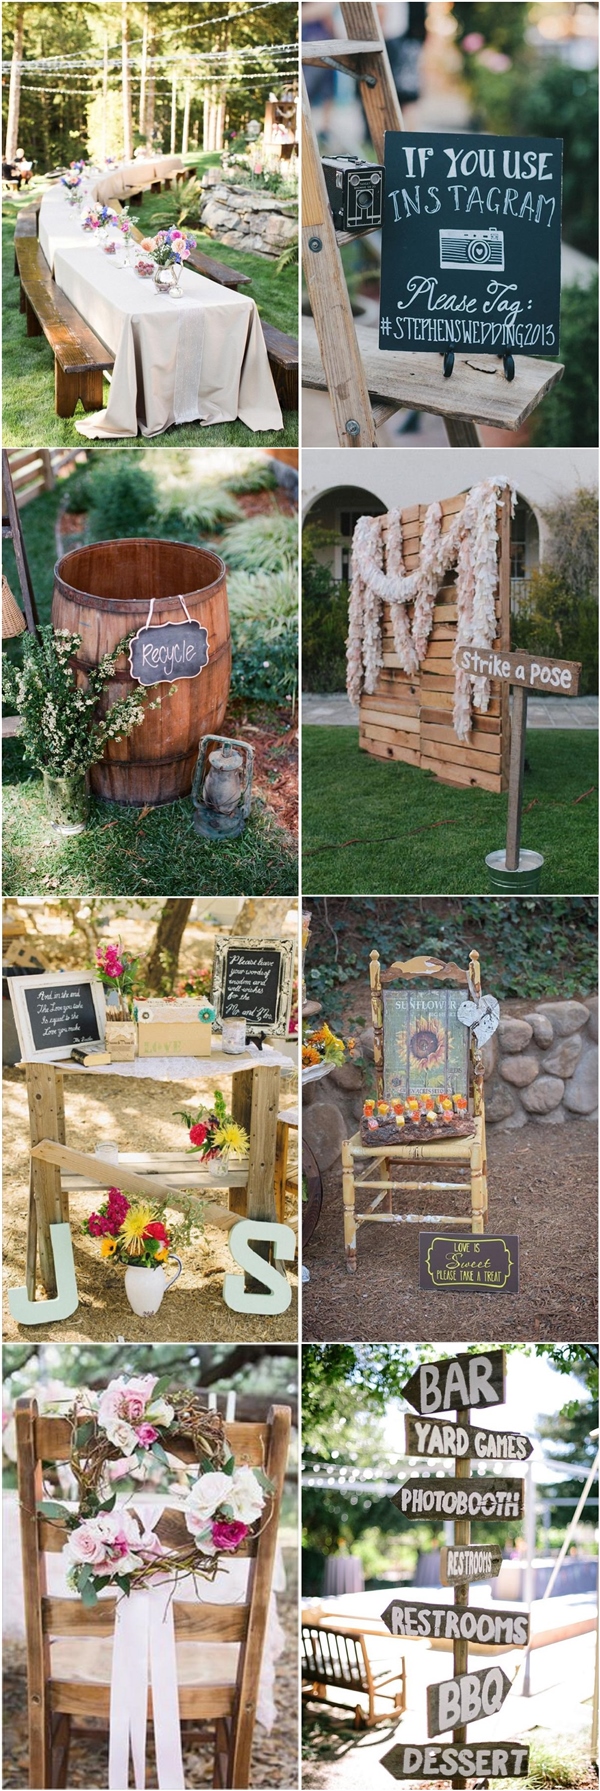 rustic country backyard wedding decor ideas